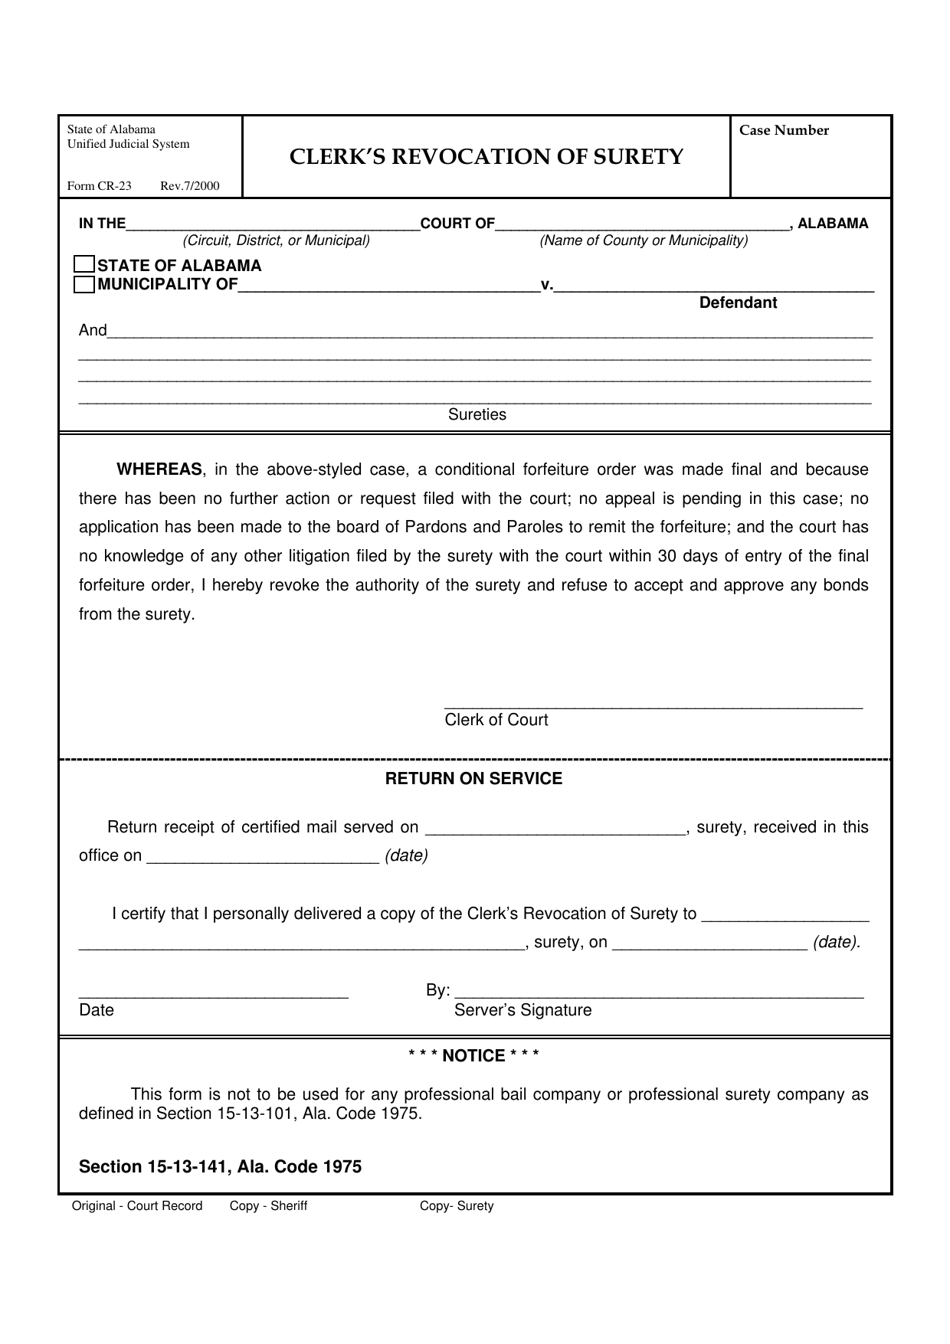 Form CR-23 Clerks Revocation of Surety - Alabama, Page 1